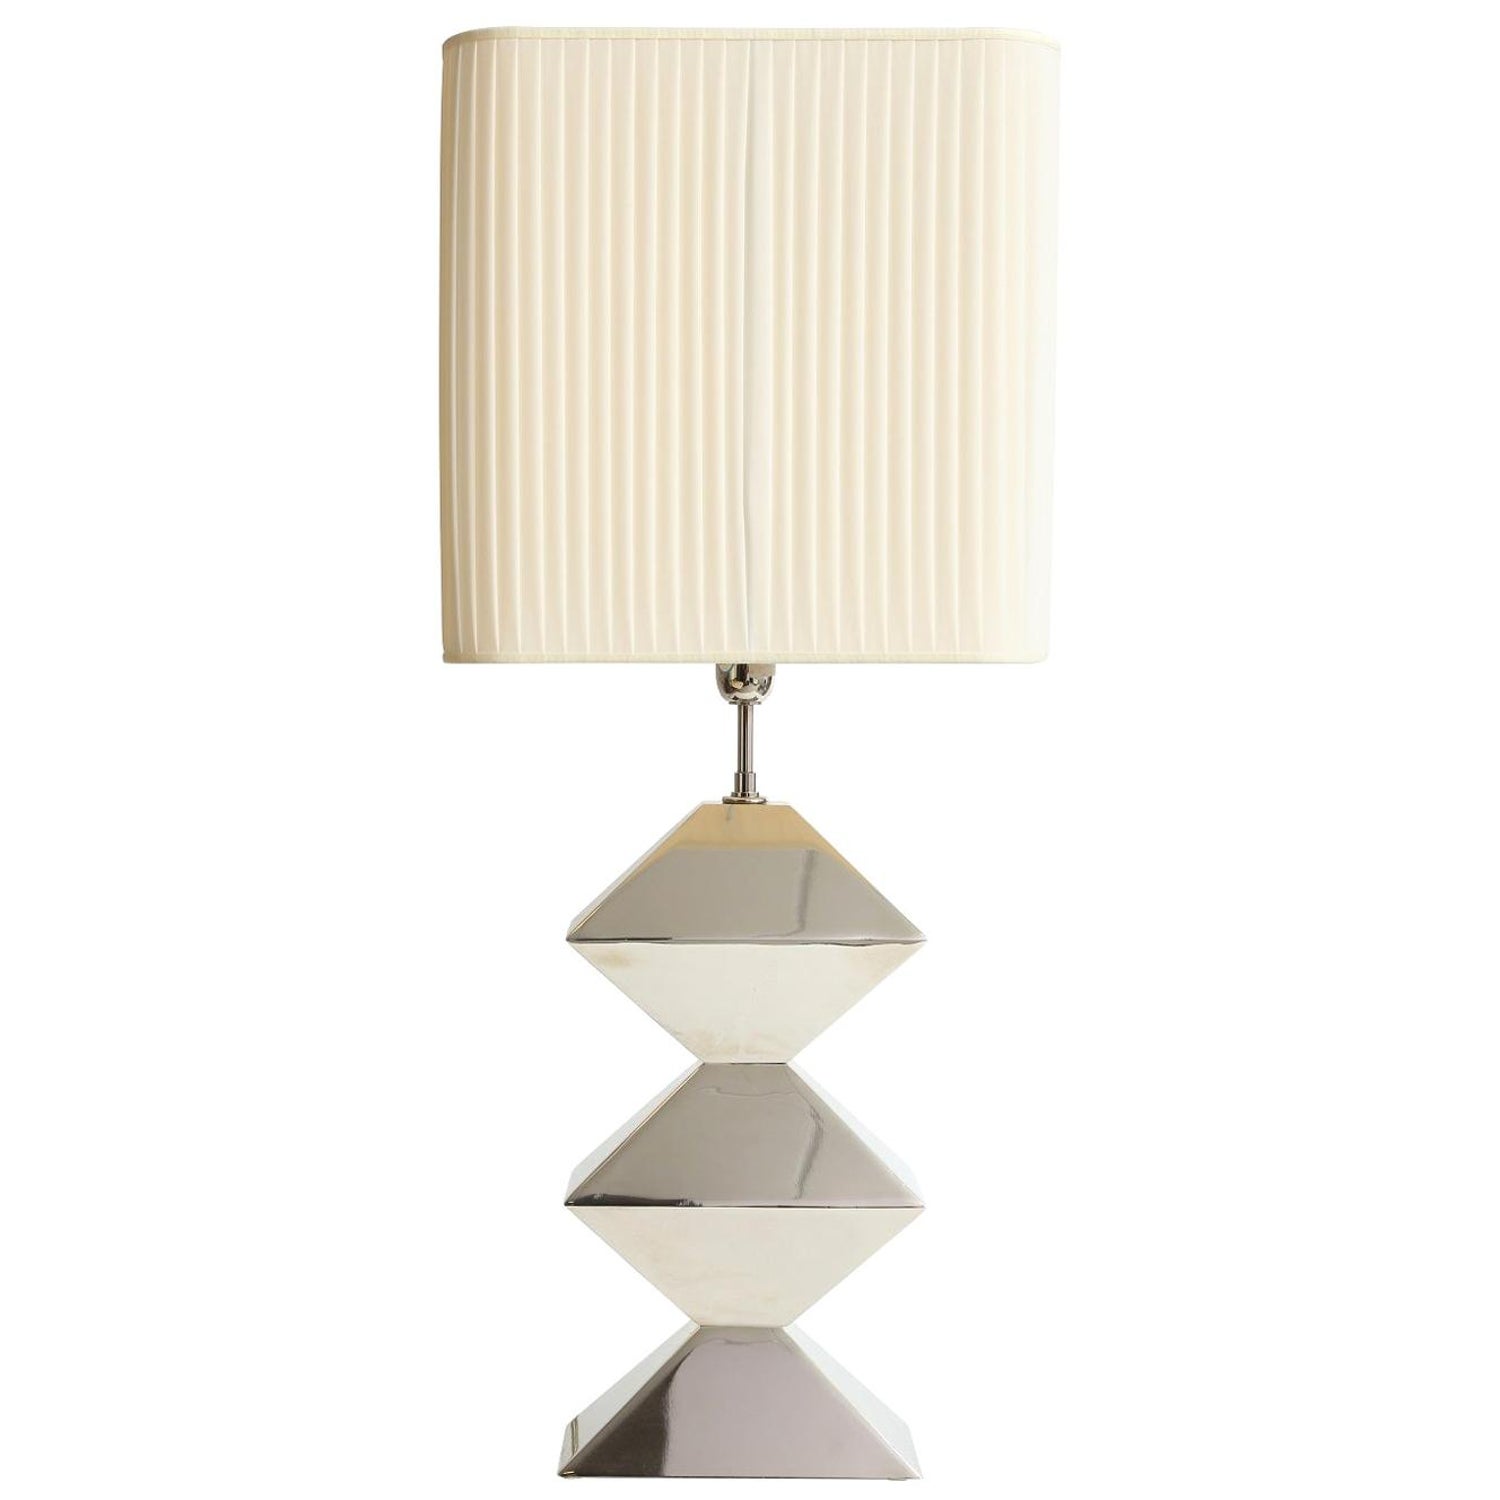 Table Lamp Piramide Nickel By Selezioni, Devon Table Lamp White Shade